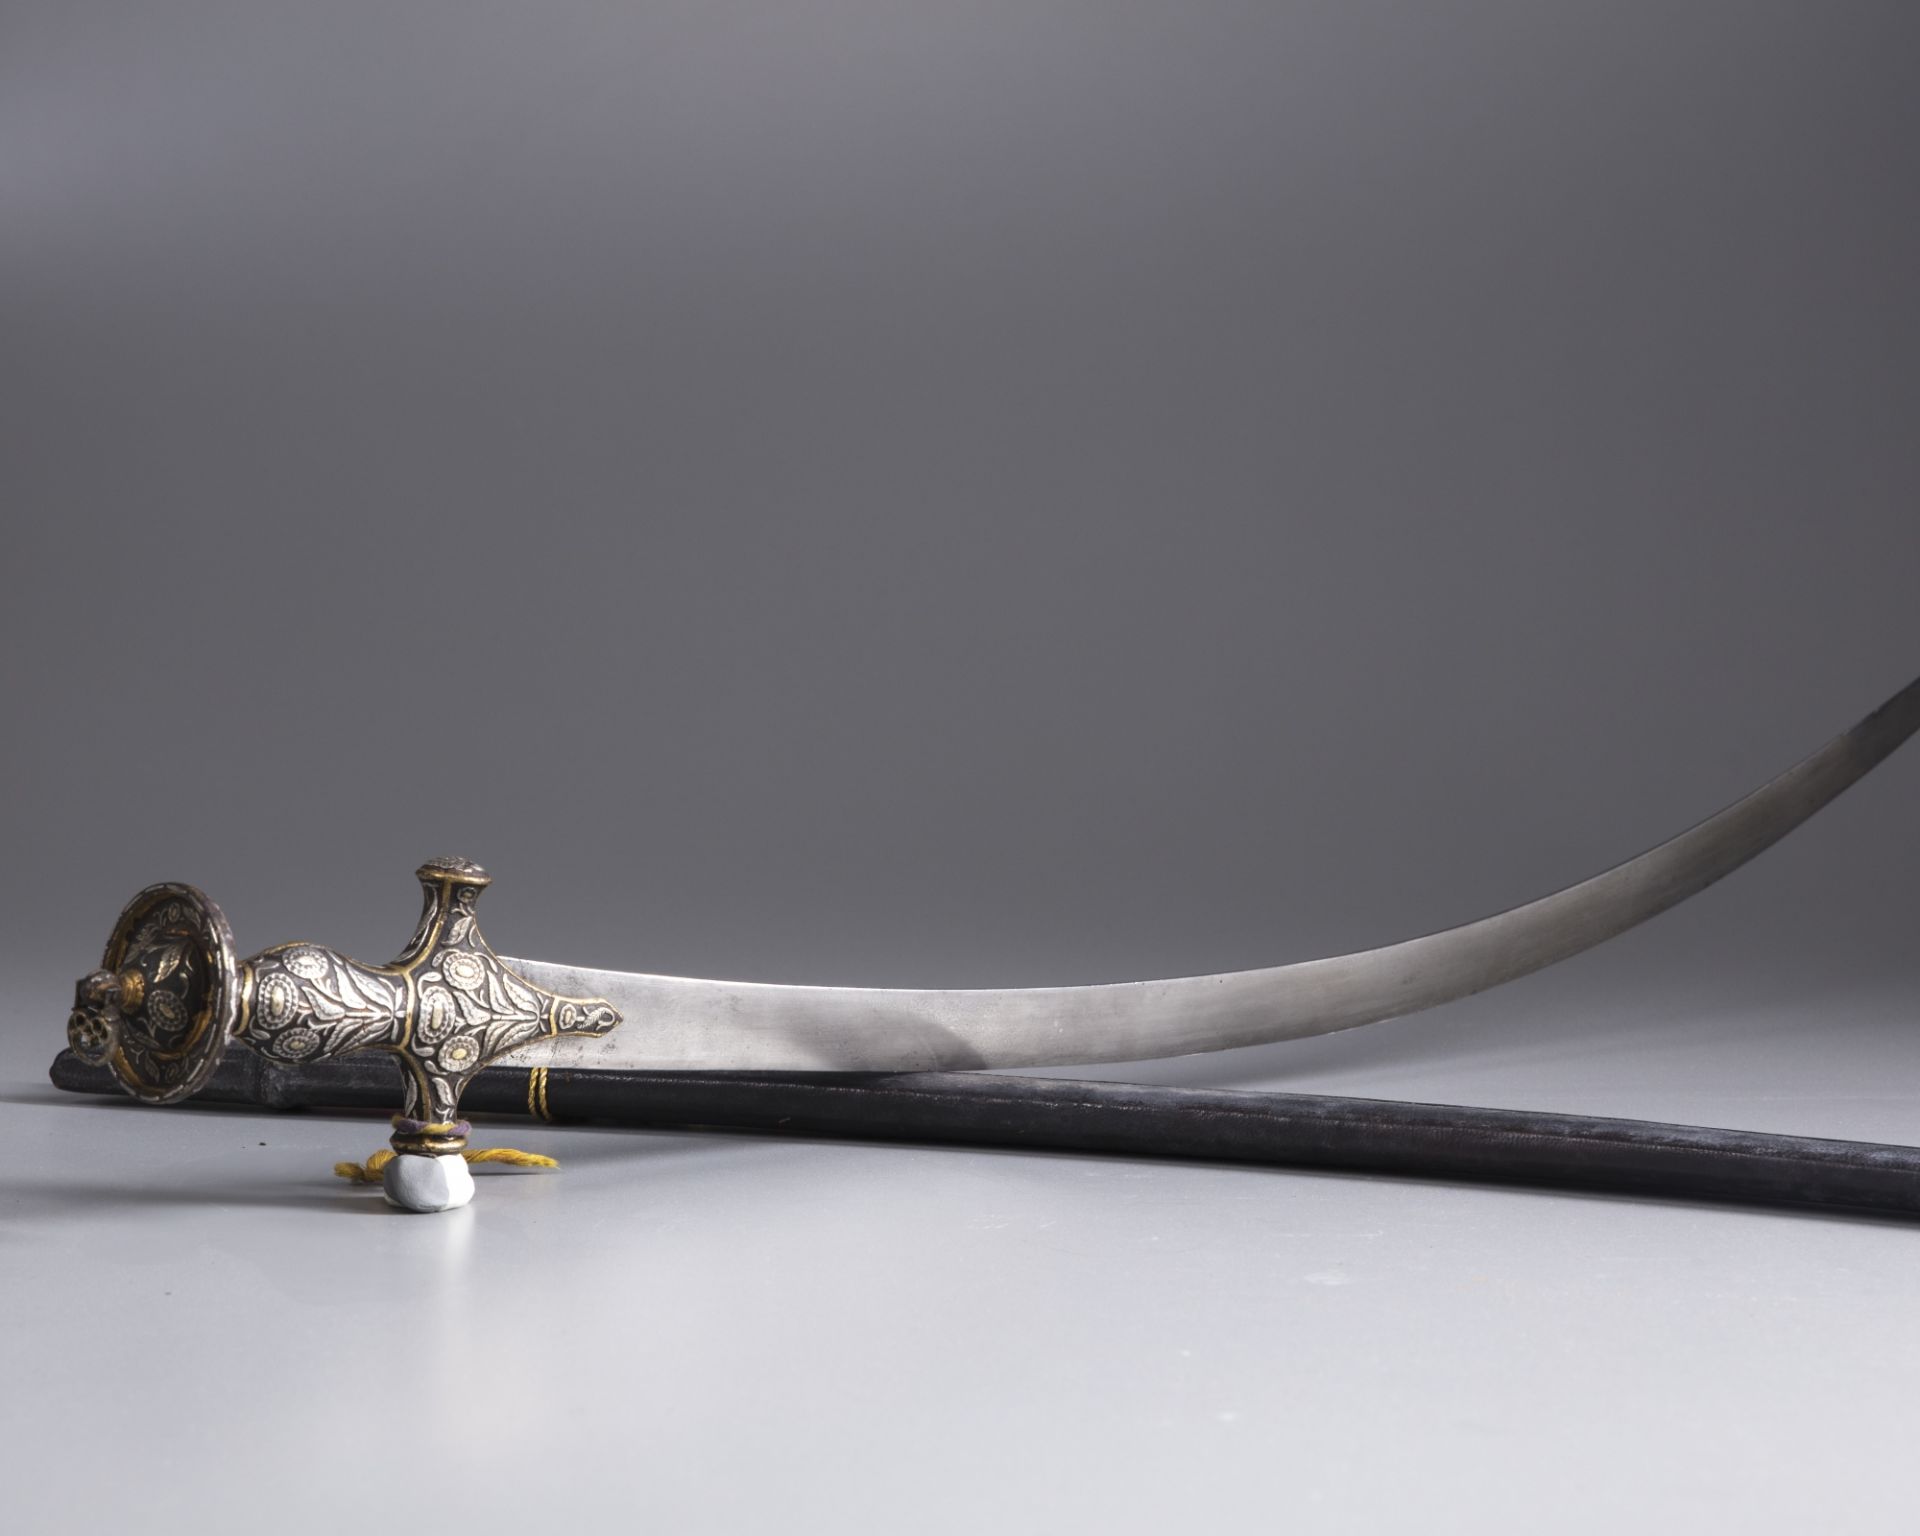 An Islamic sword